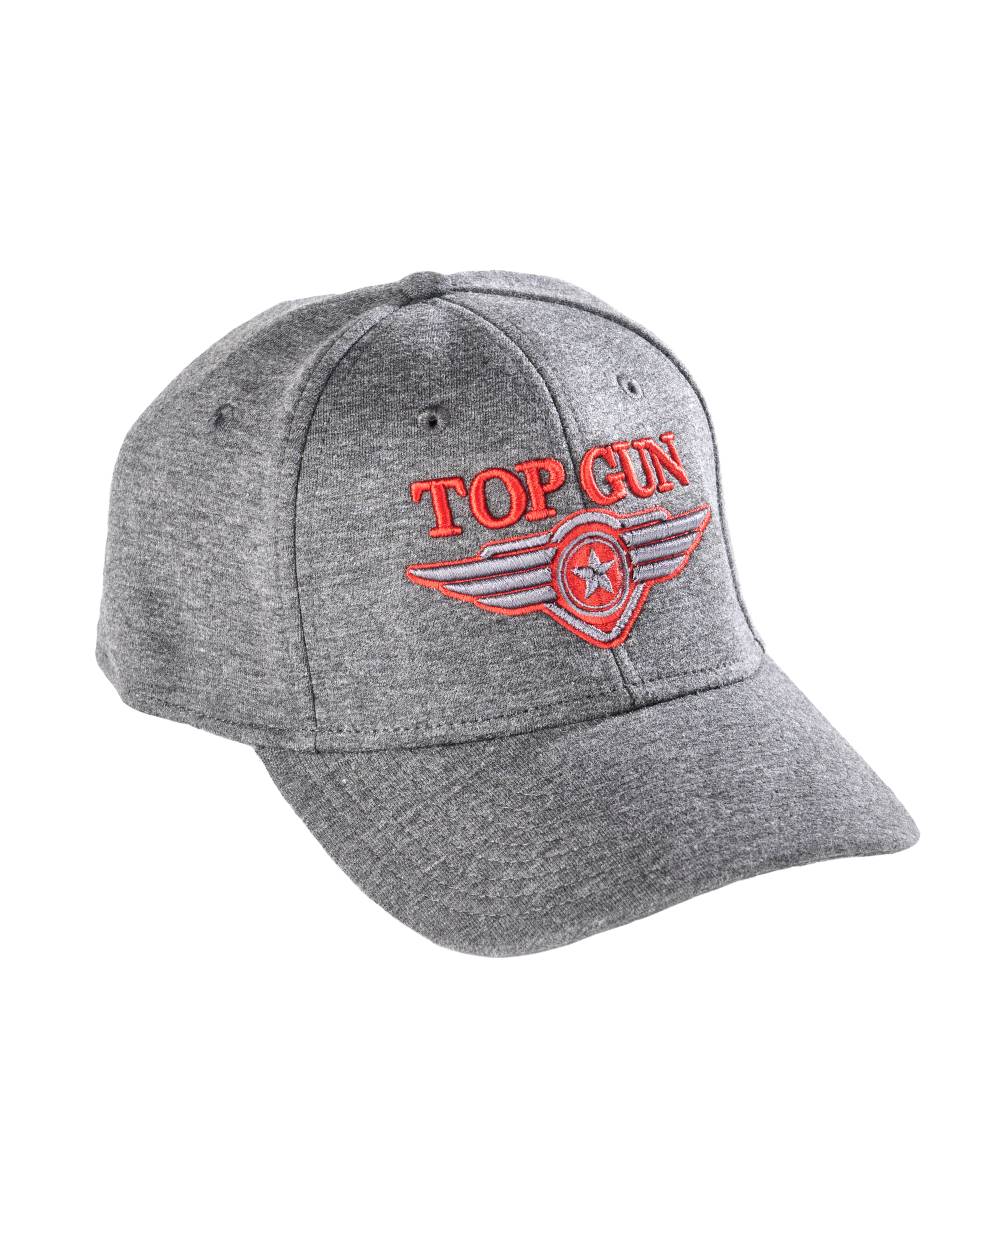 Cap Top Deutschland | Gun Top TG2019-3167 Gun® Snapback Shop